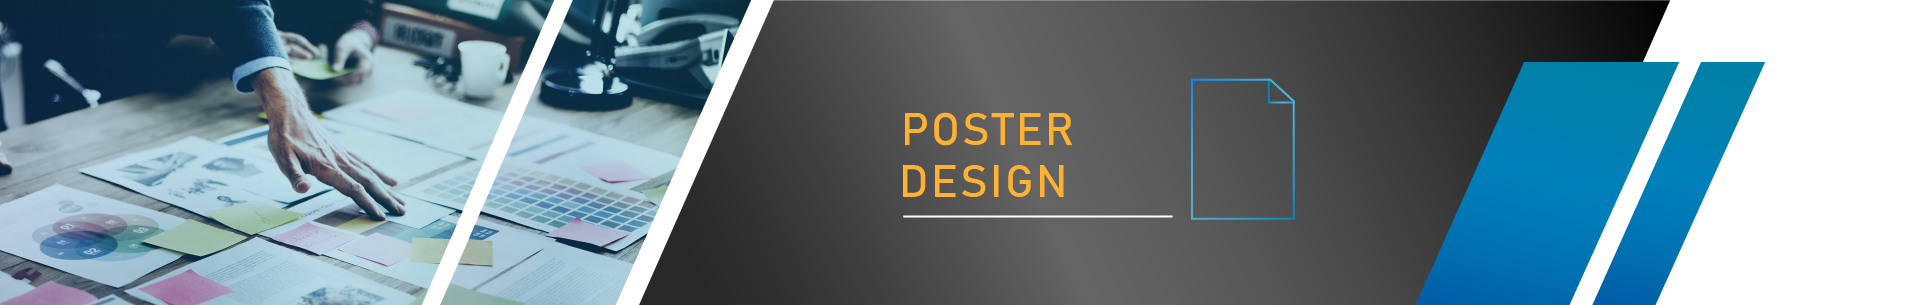 Poster Design, Poster Printing